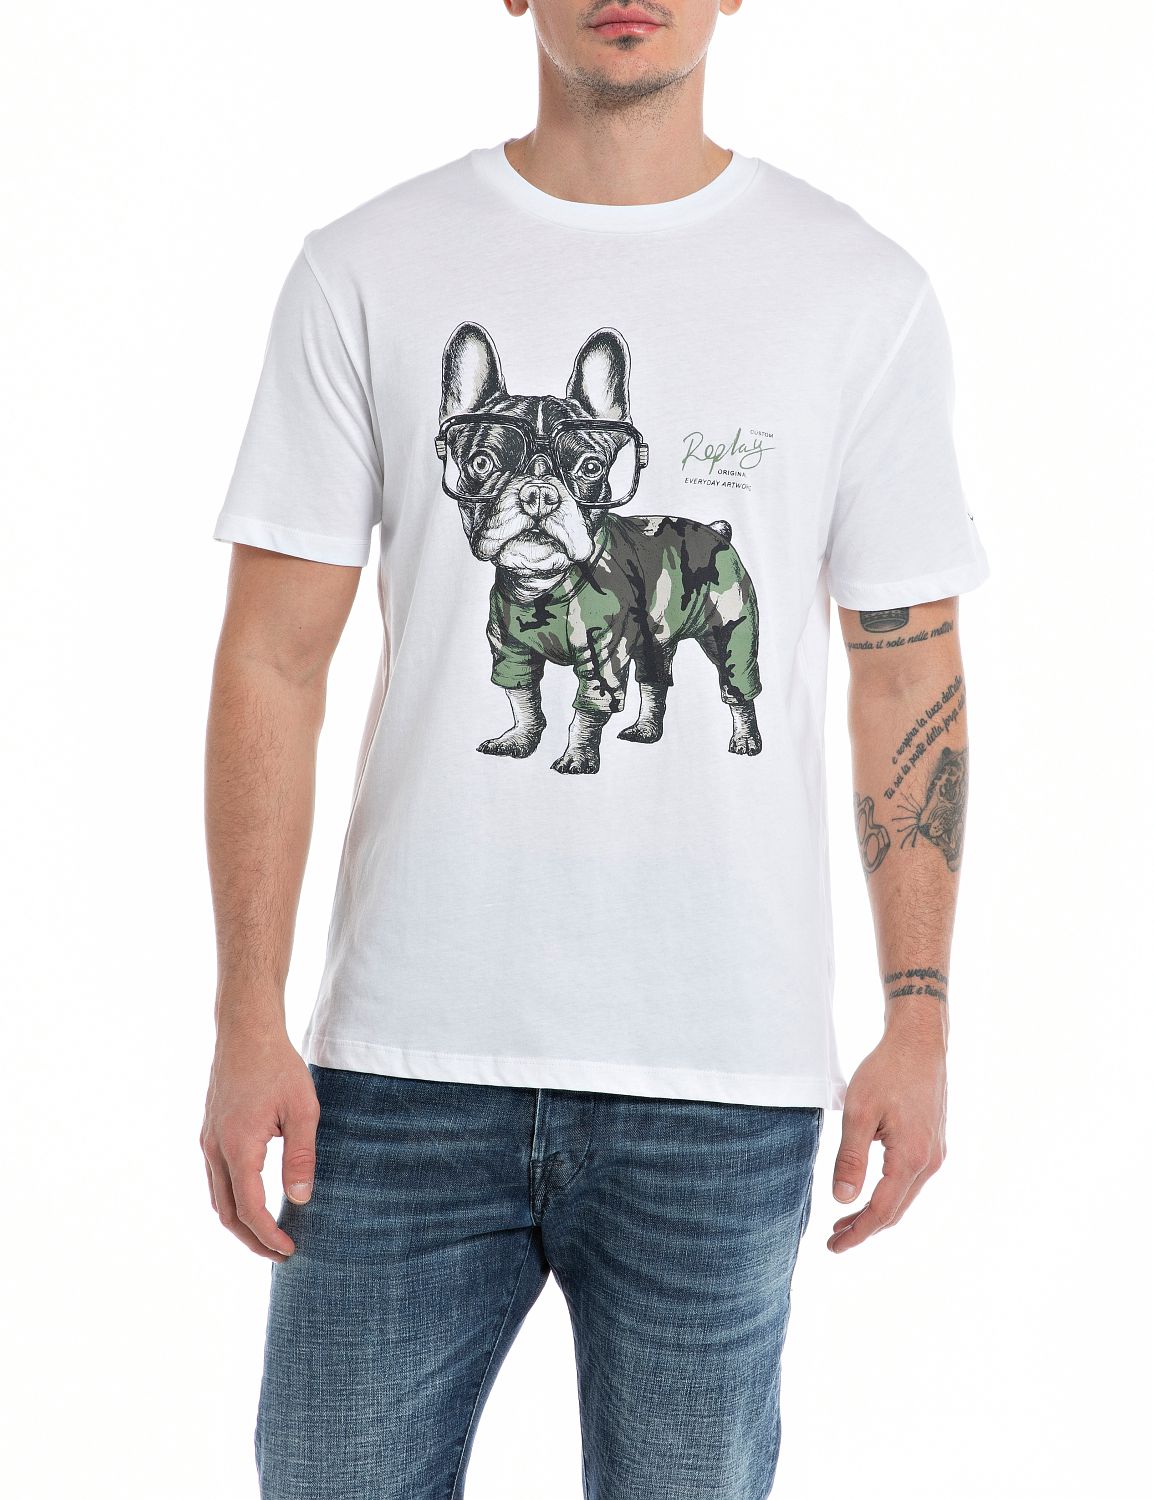 T-shirt Stampa Bulldog REPLAY M6677. 000.2660. 001 - Bianco